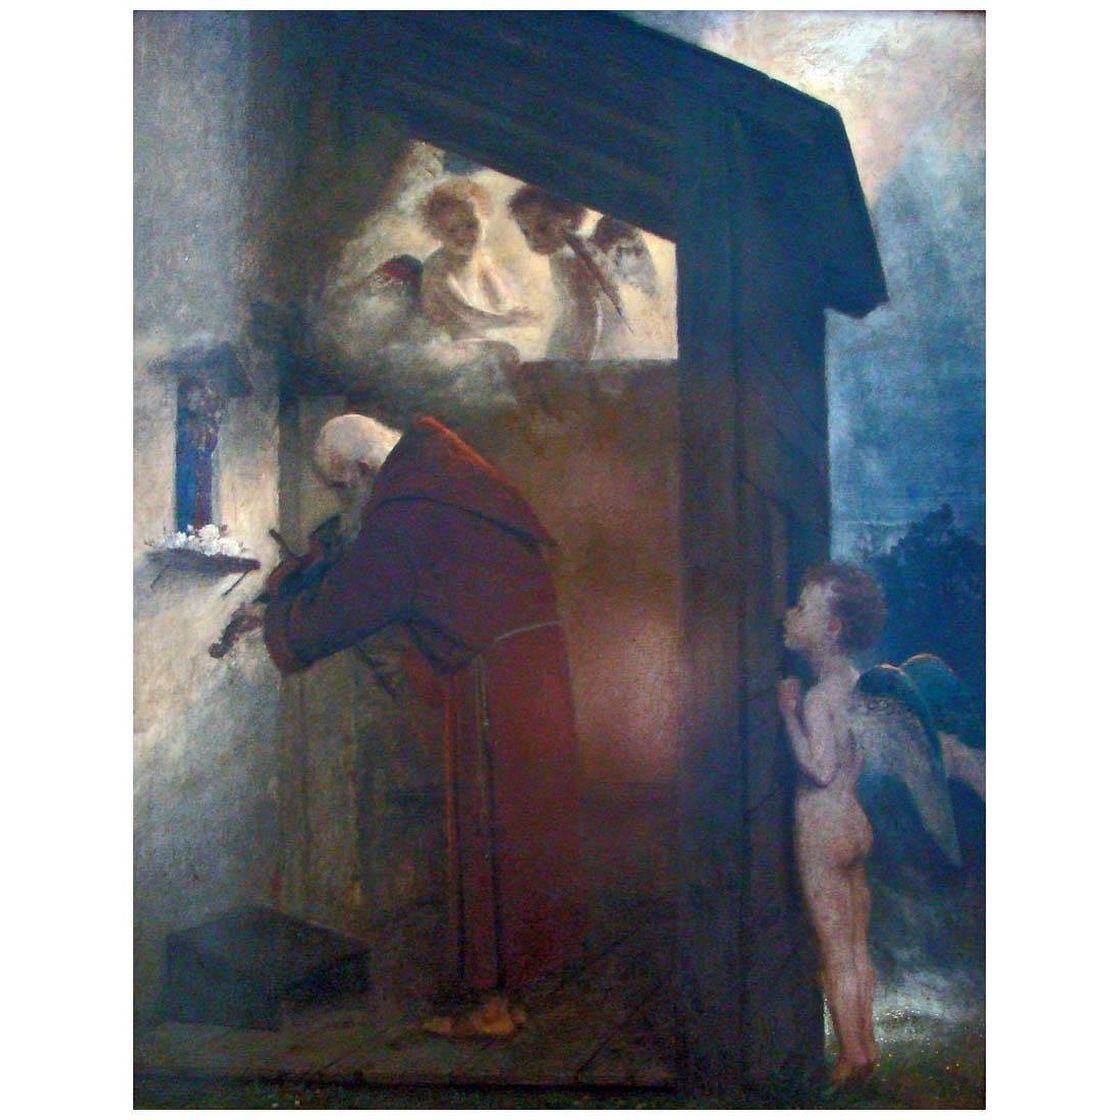 Arnold Böklin. Odysseus and Polyphemus. 1896. Museum of Fine Arts Boston